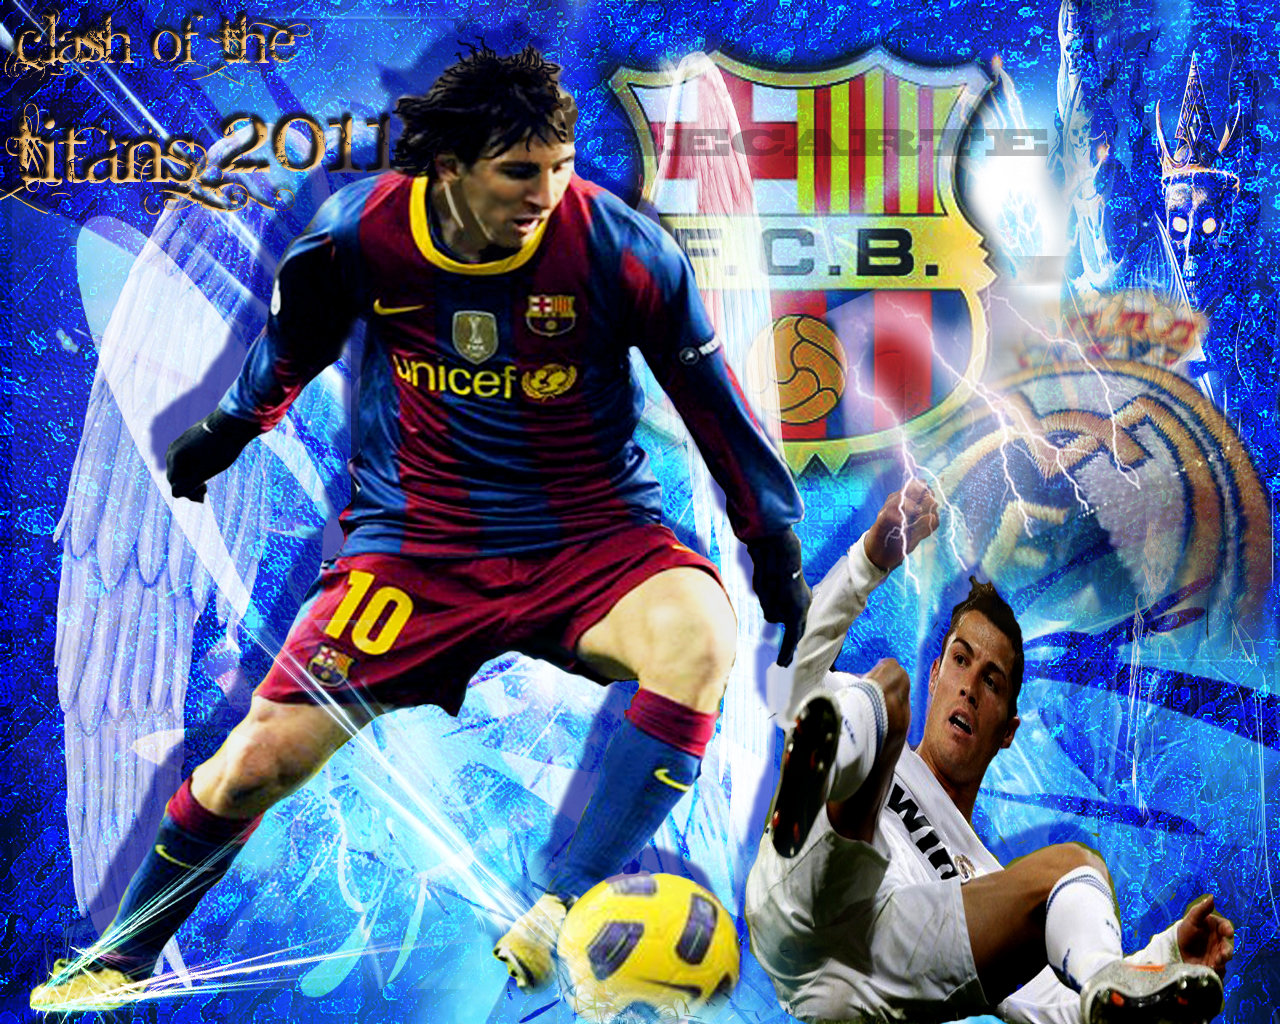 http://2.bp.blogspot.com/-ARTW63rmnBI/TeJHlxQpp9I/AAAAAAAAEgY/64VtF6I0rHo/s1600/barcelona_vs_real_madrid_2011_fc_barcelona.jpg